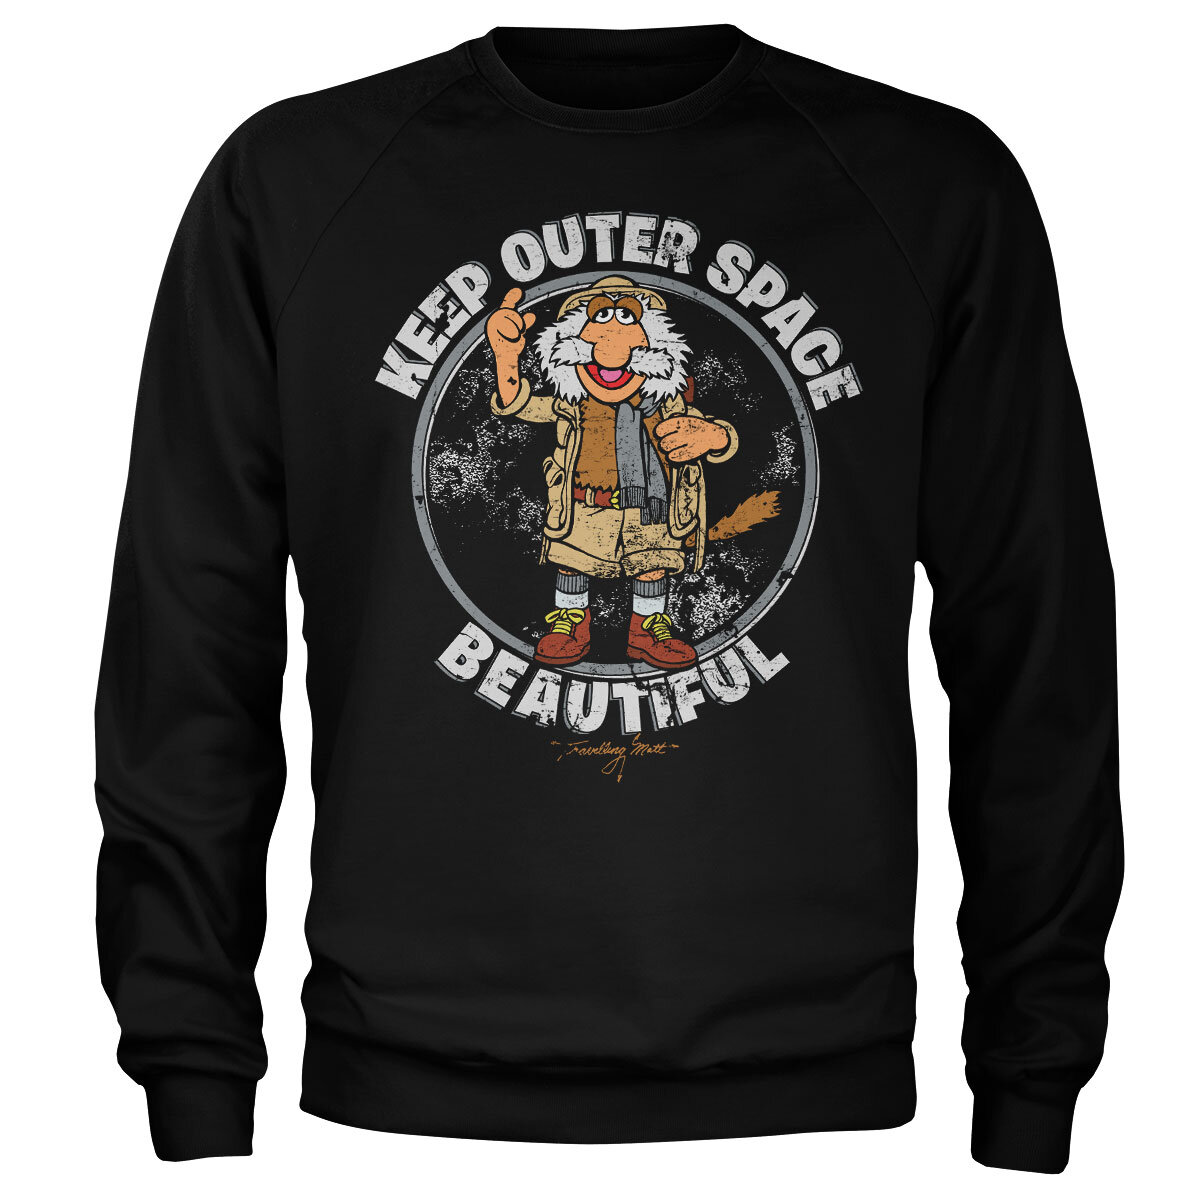 Traveling Matt - Make Outer Space Beautiful Sweatshirt